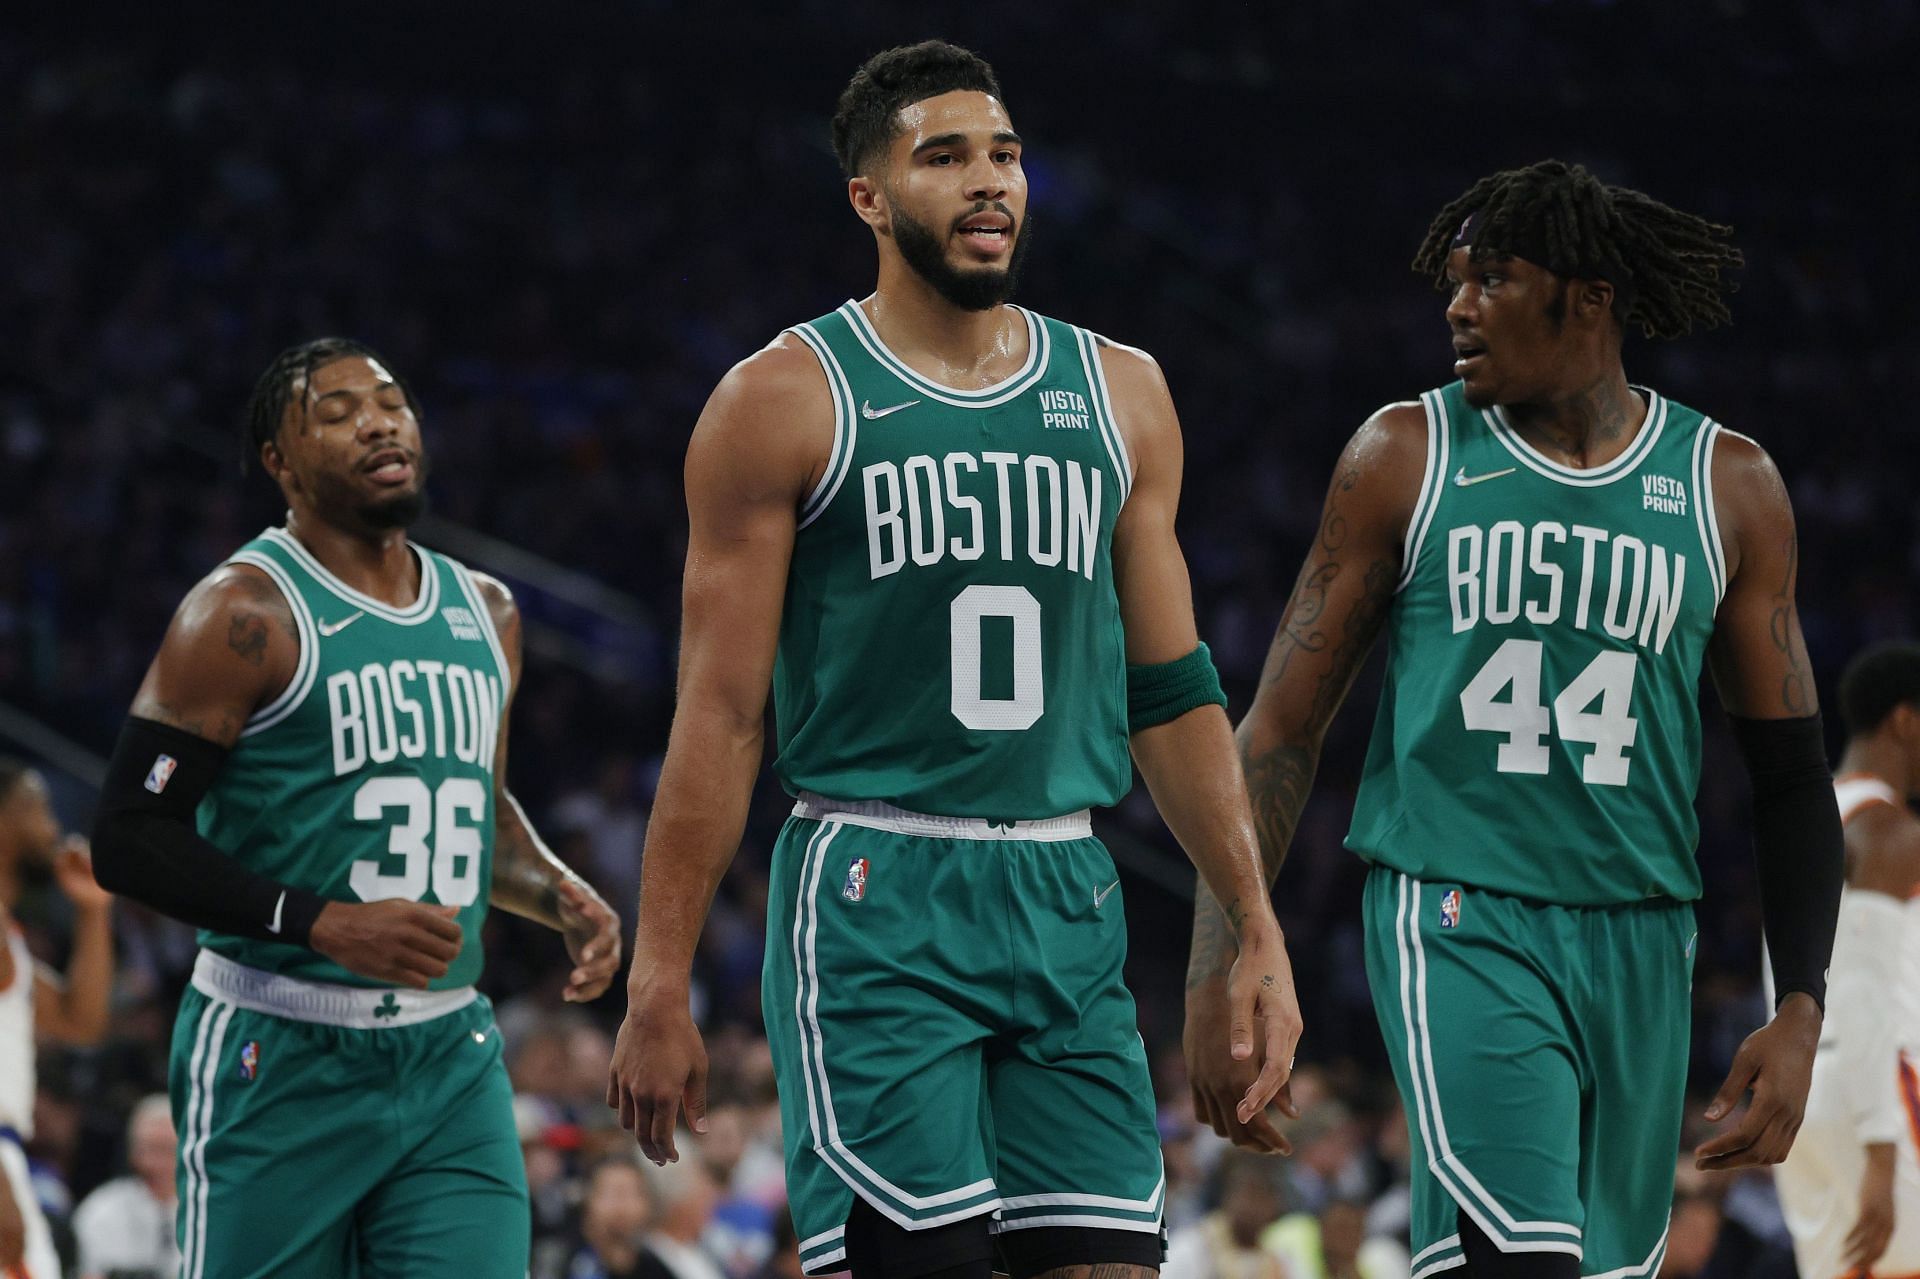 Boston Celtics in action vs the New York Knicks.